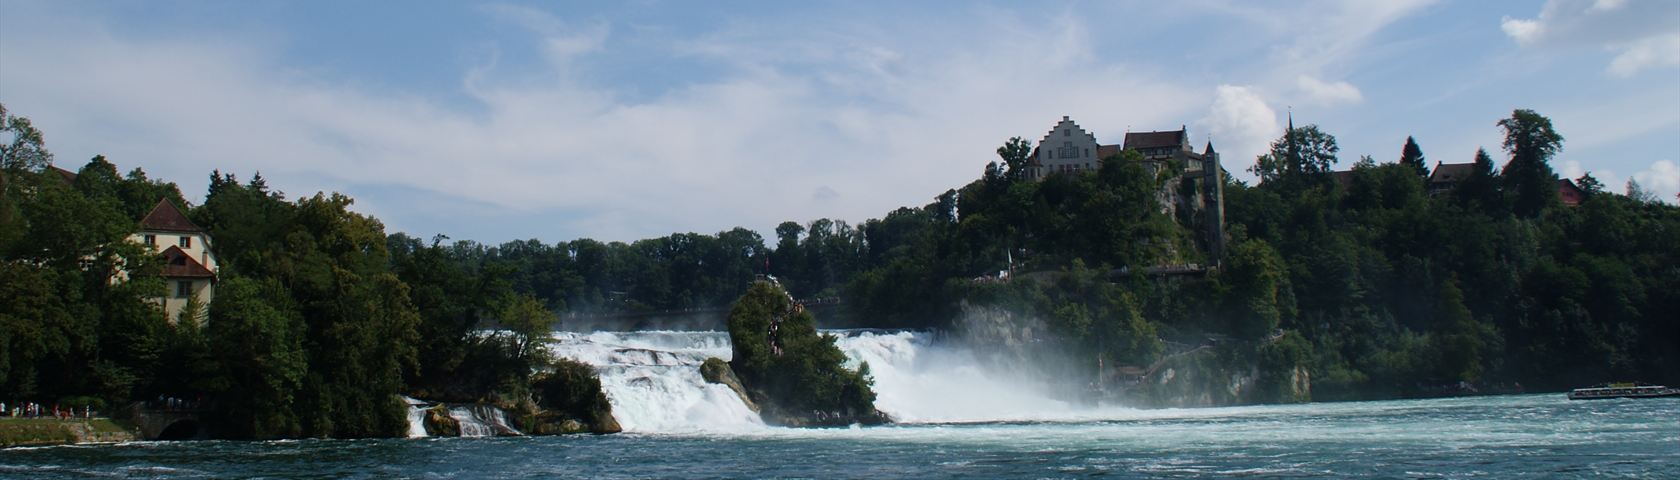 Rhin Falls